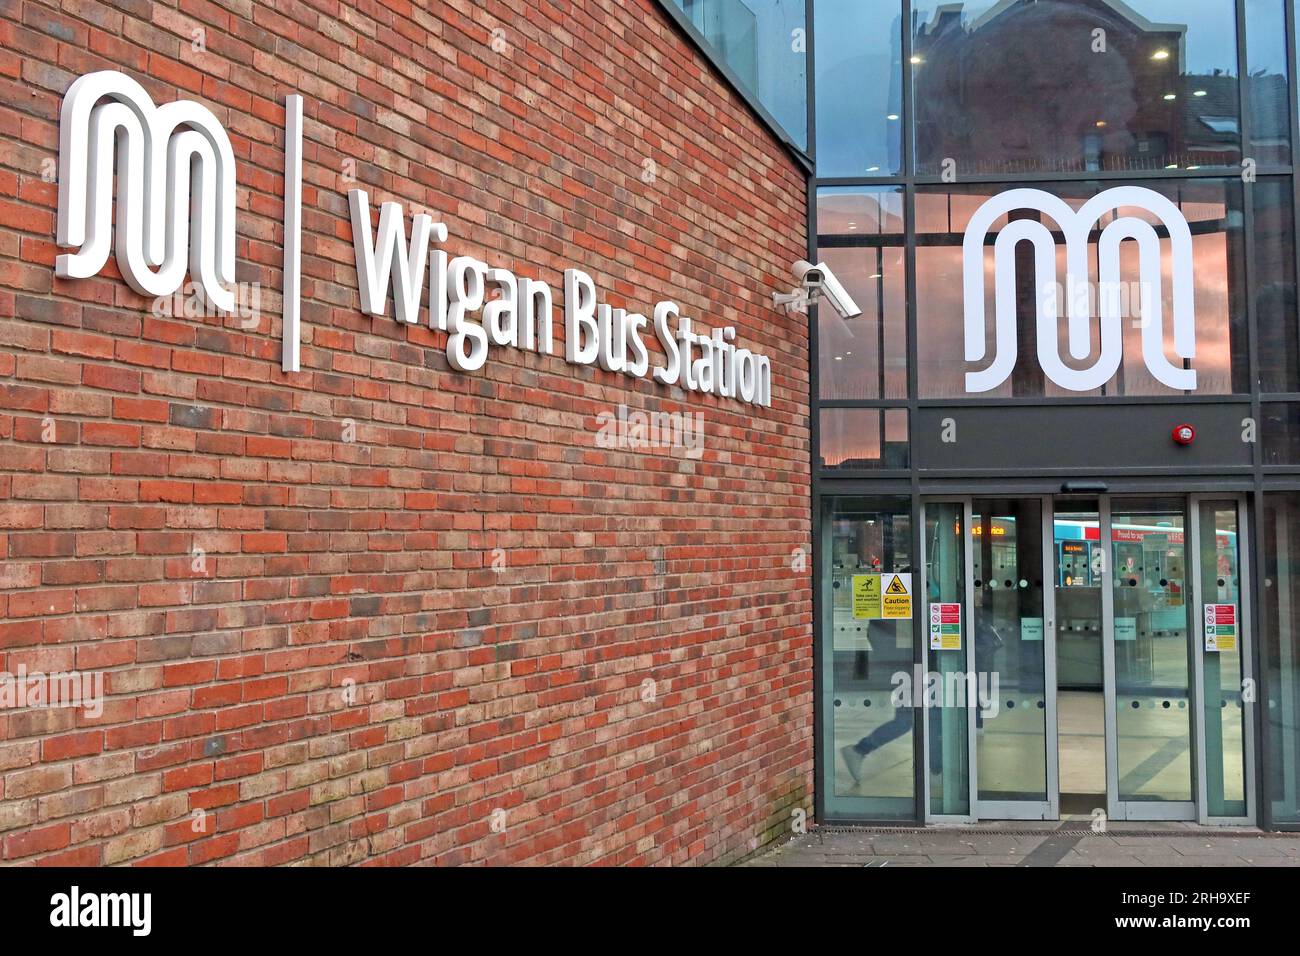 Wigan bus station, Market St, Wigan, Lancashire, England, UK, WN1 1HX Stock Photo